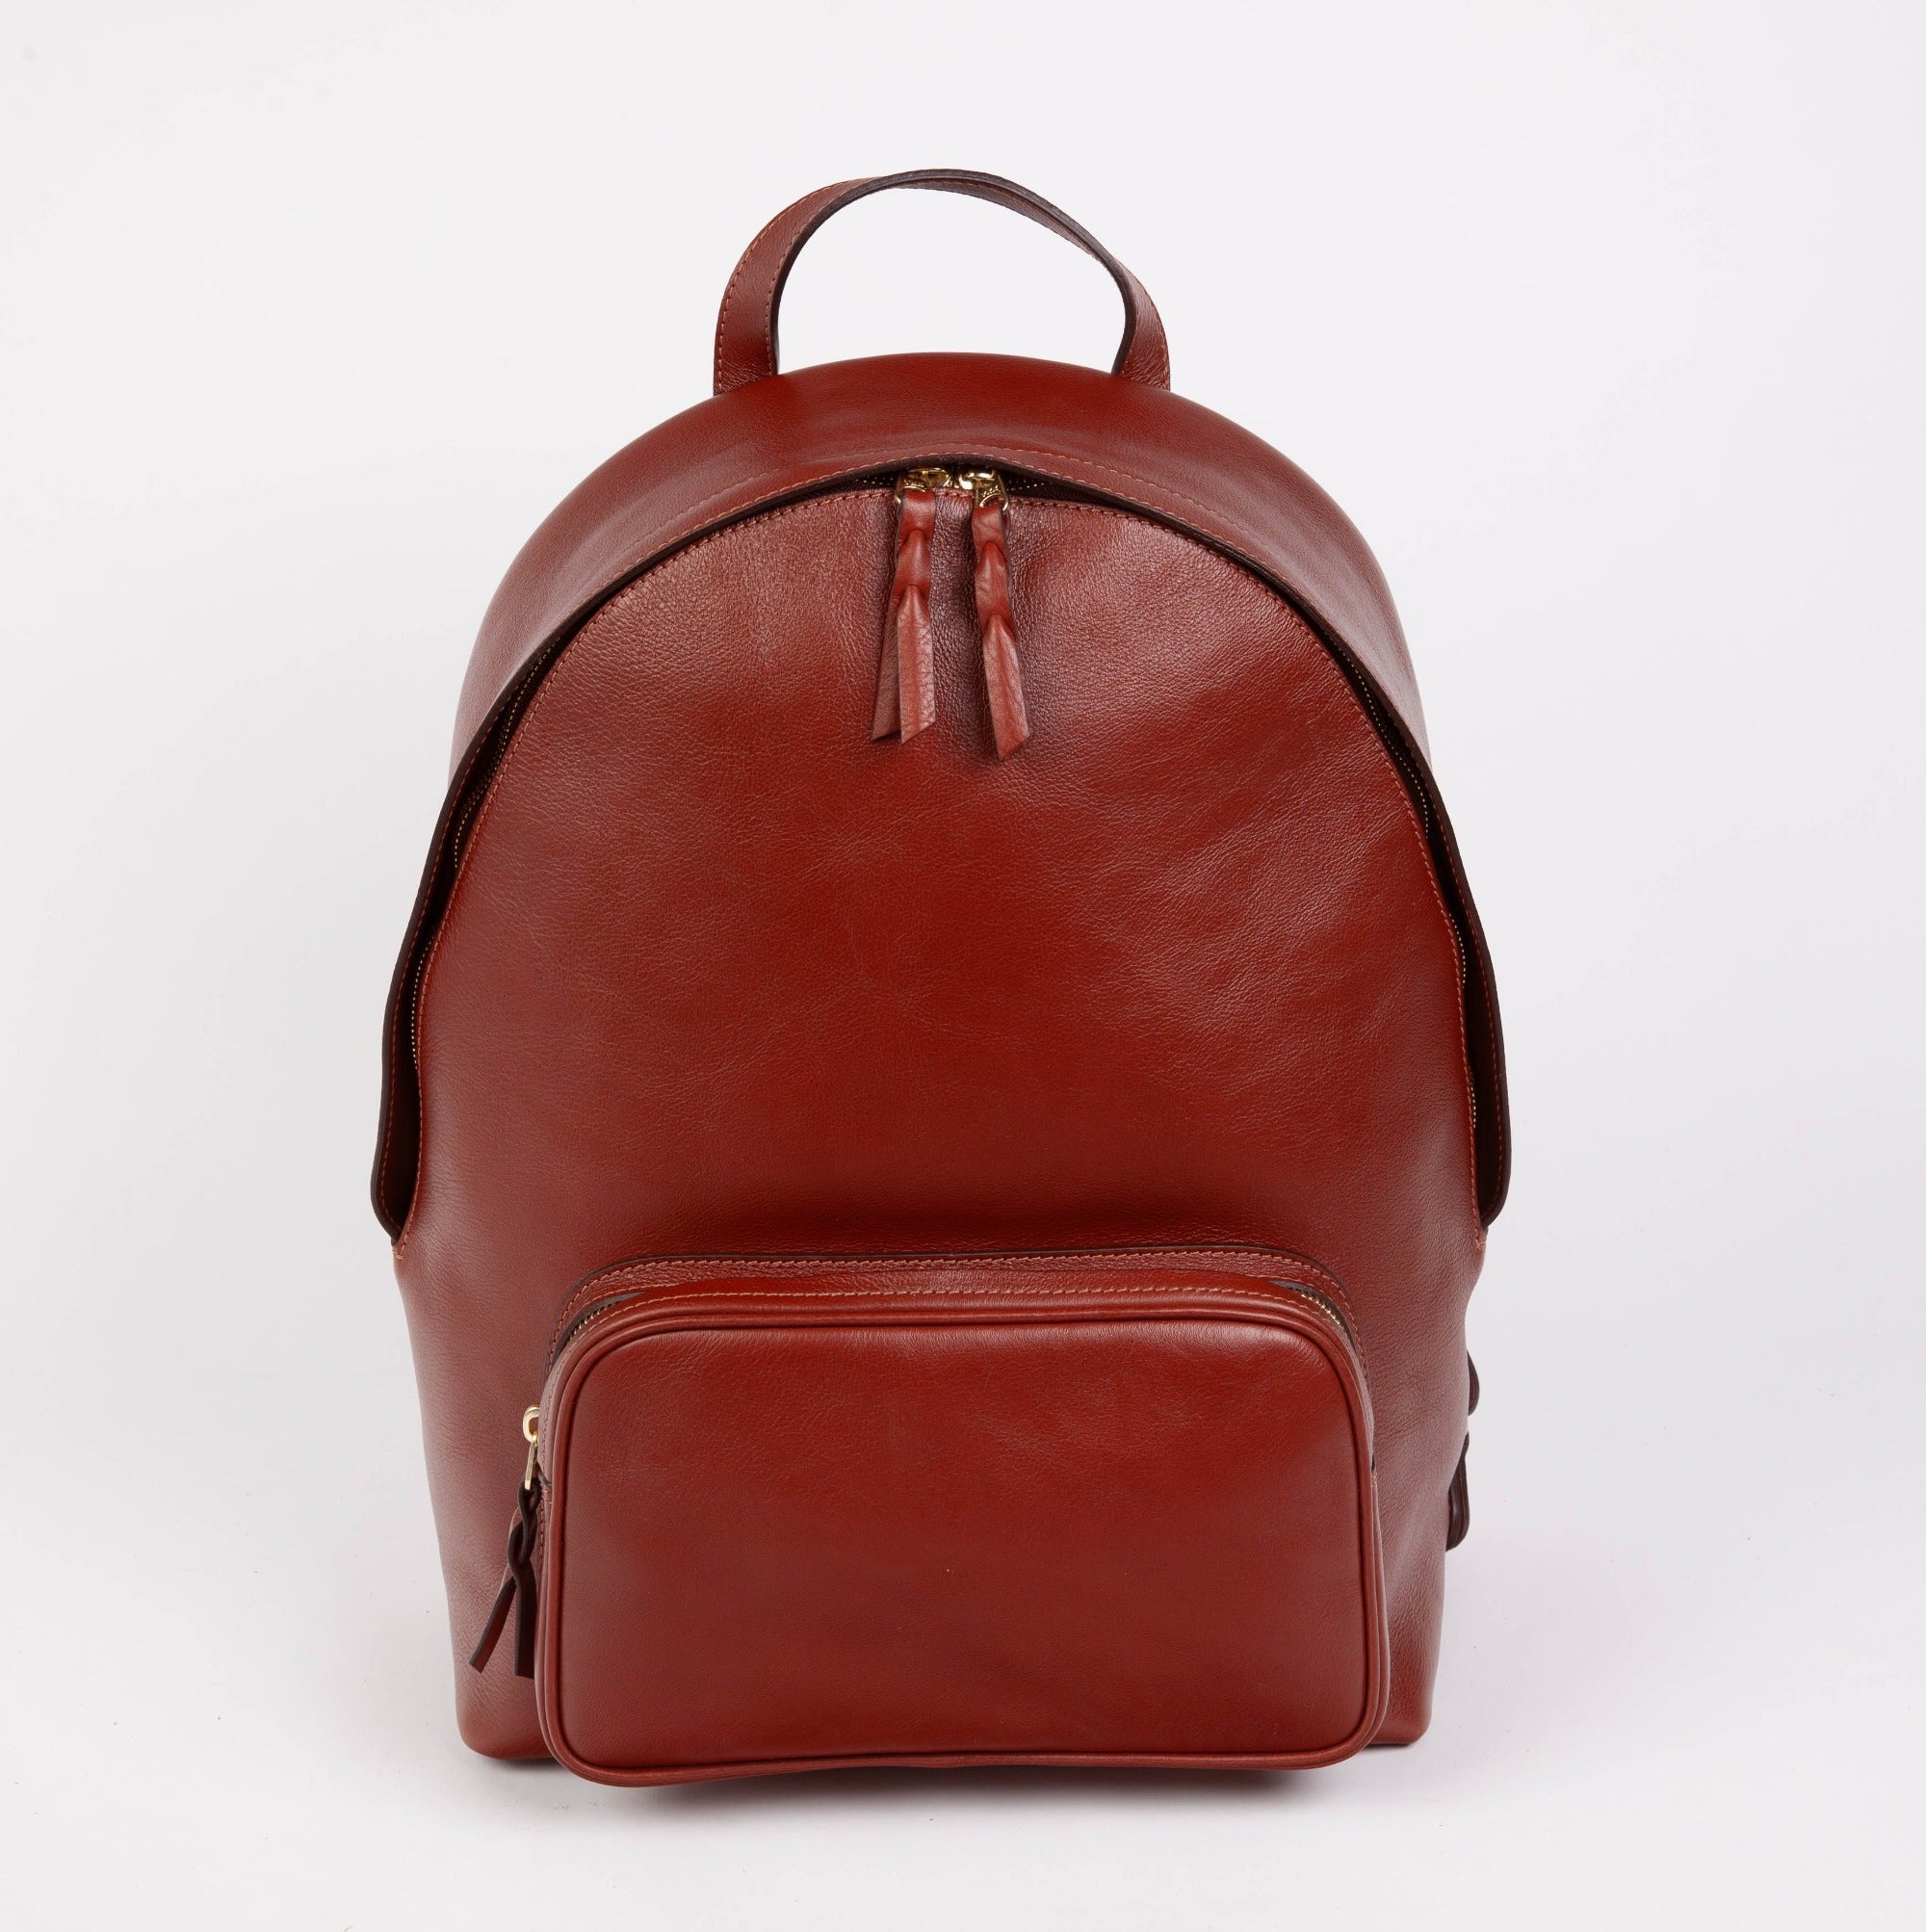 Fioretta Italian Genuine Leather Backpack Purse Travel Bag For Women - Red